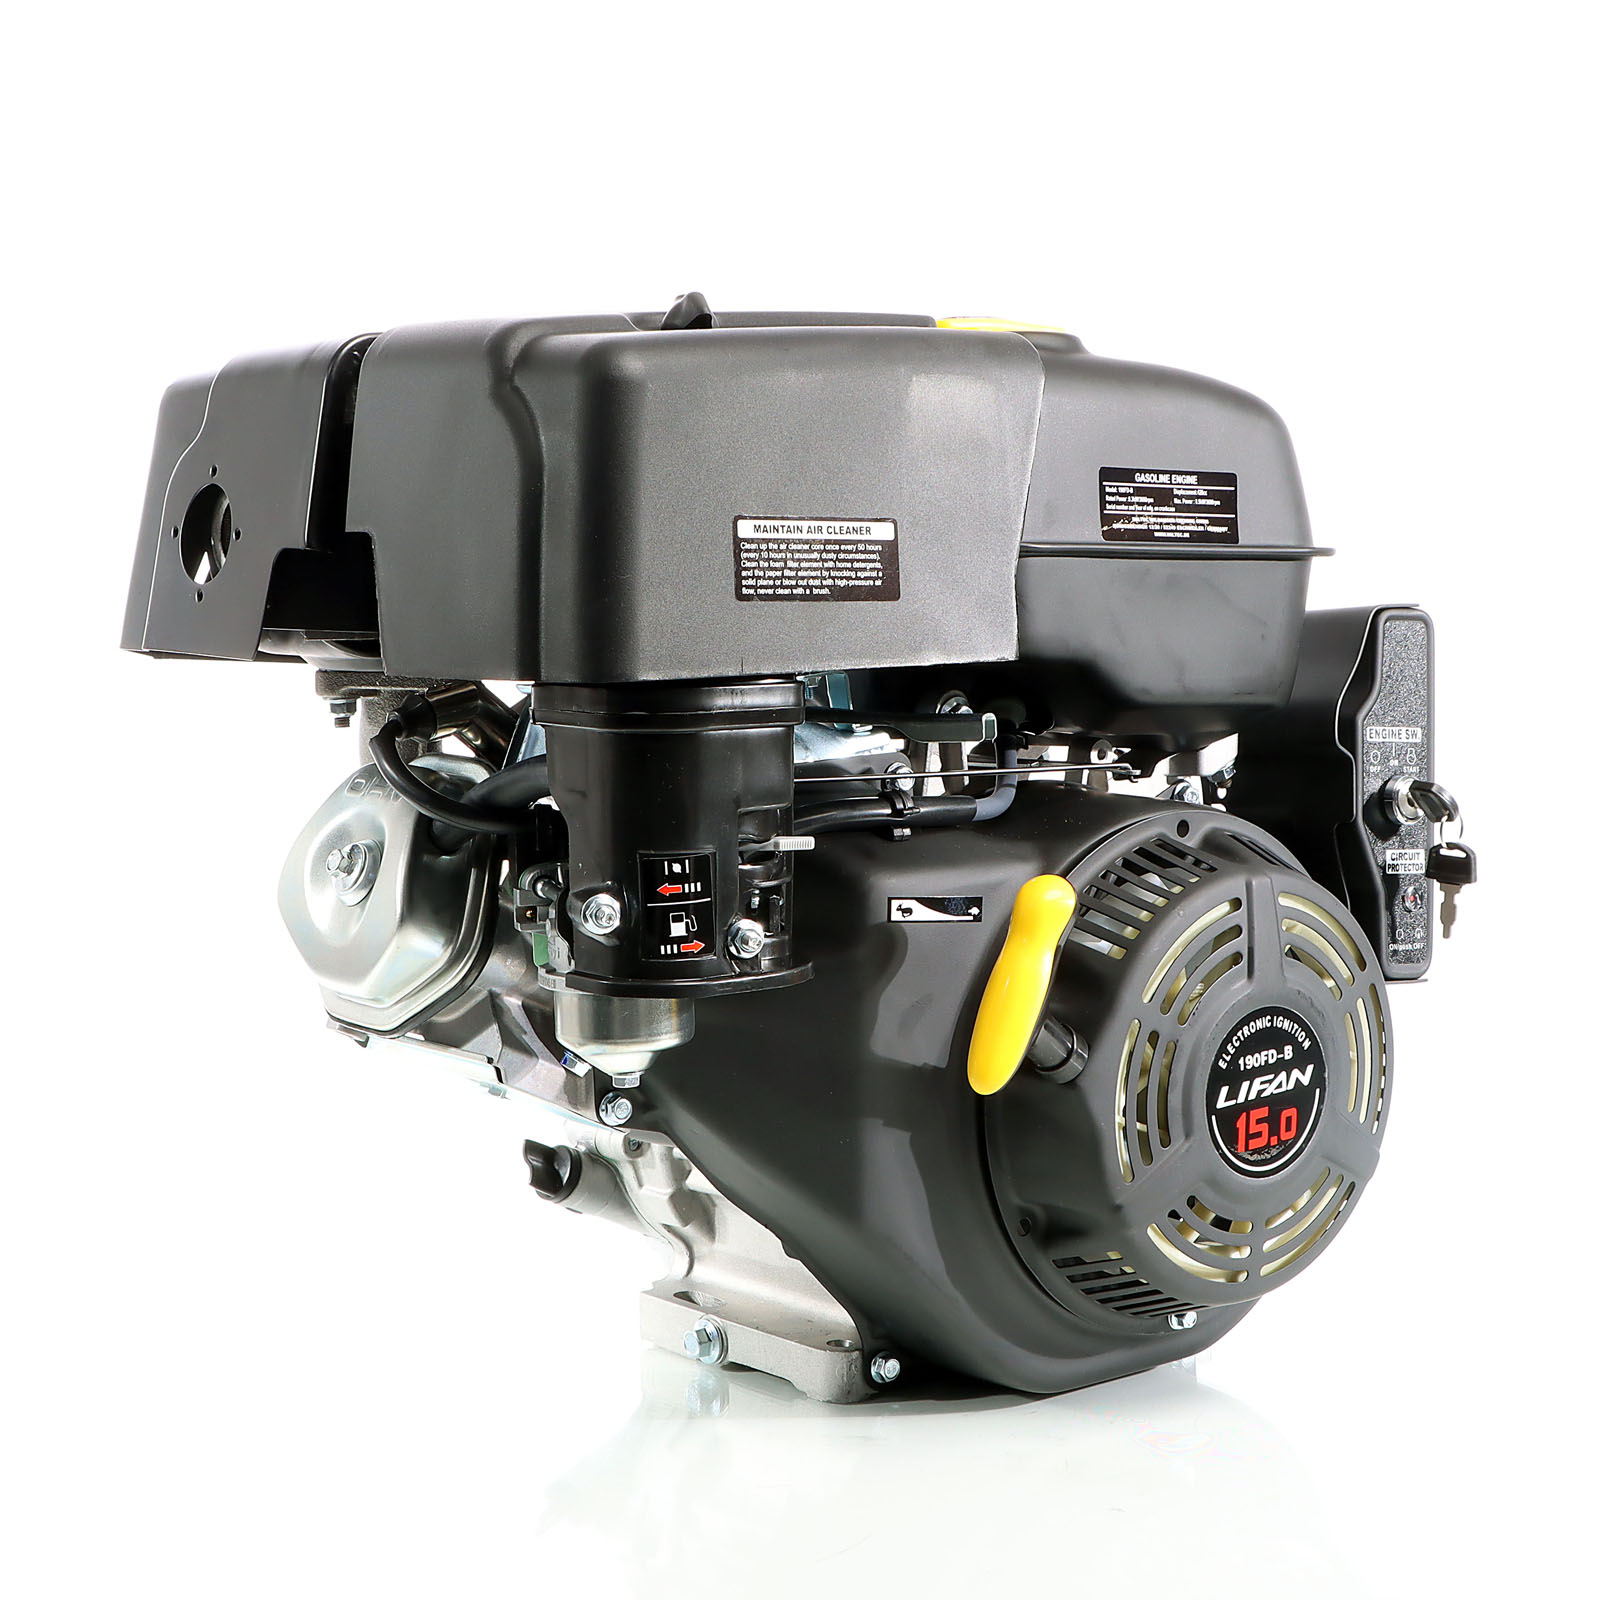 LIFAN 190 Petrol Gasoline Engine 10.5kw (15Hp) 1 inch E-Start Go-Kart